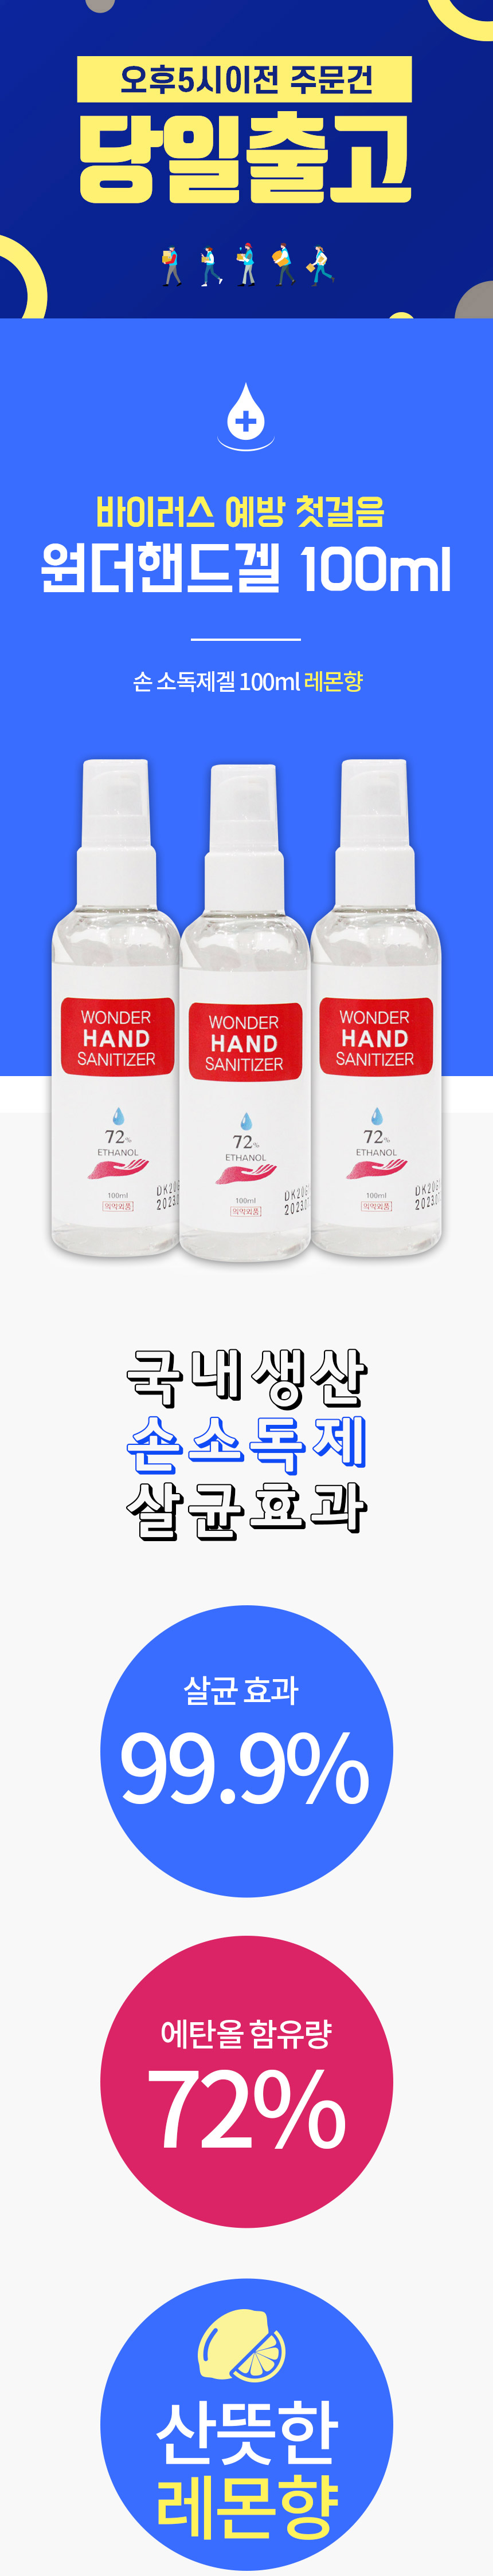 hand sanitizer100ml_1.jpg